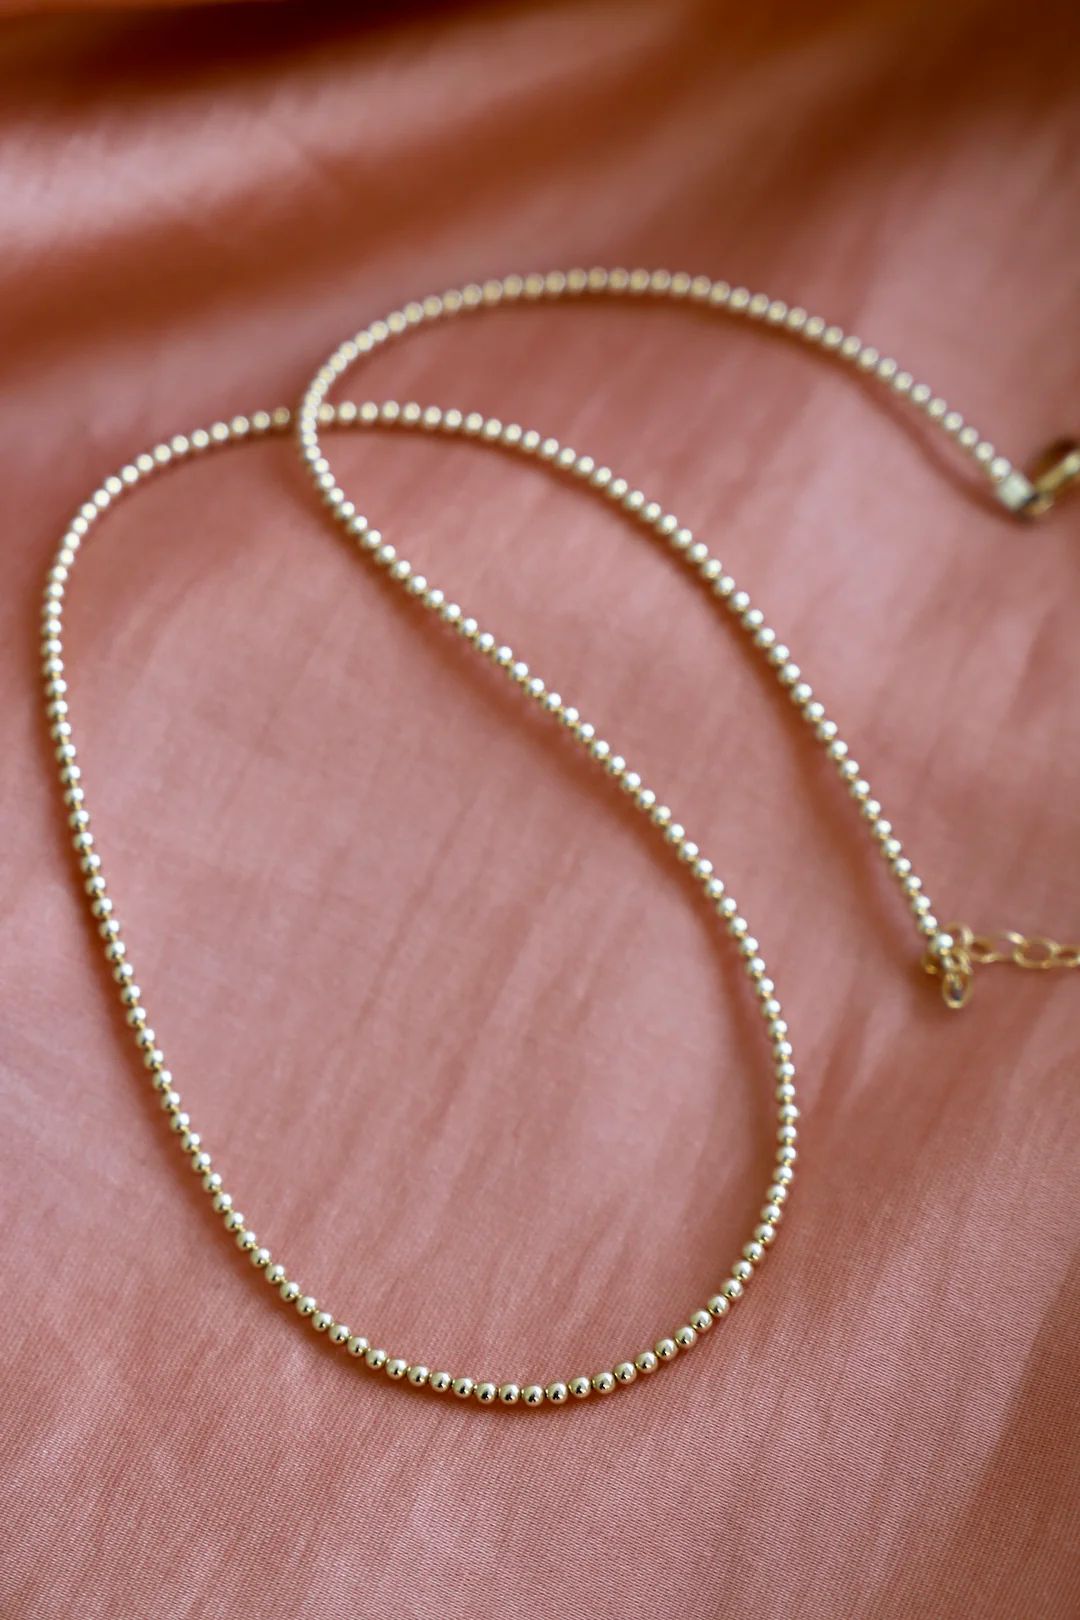 GOLD FILLED BEADED CHAIN | Katie Waltman Jewelry